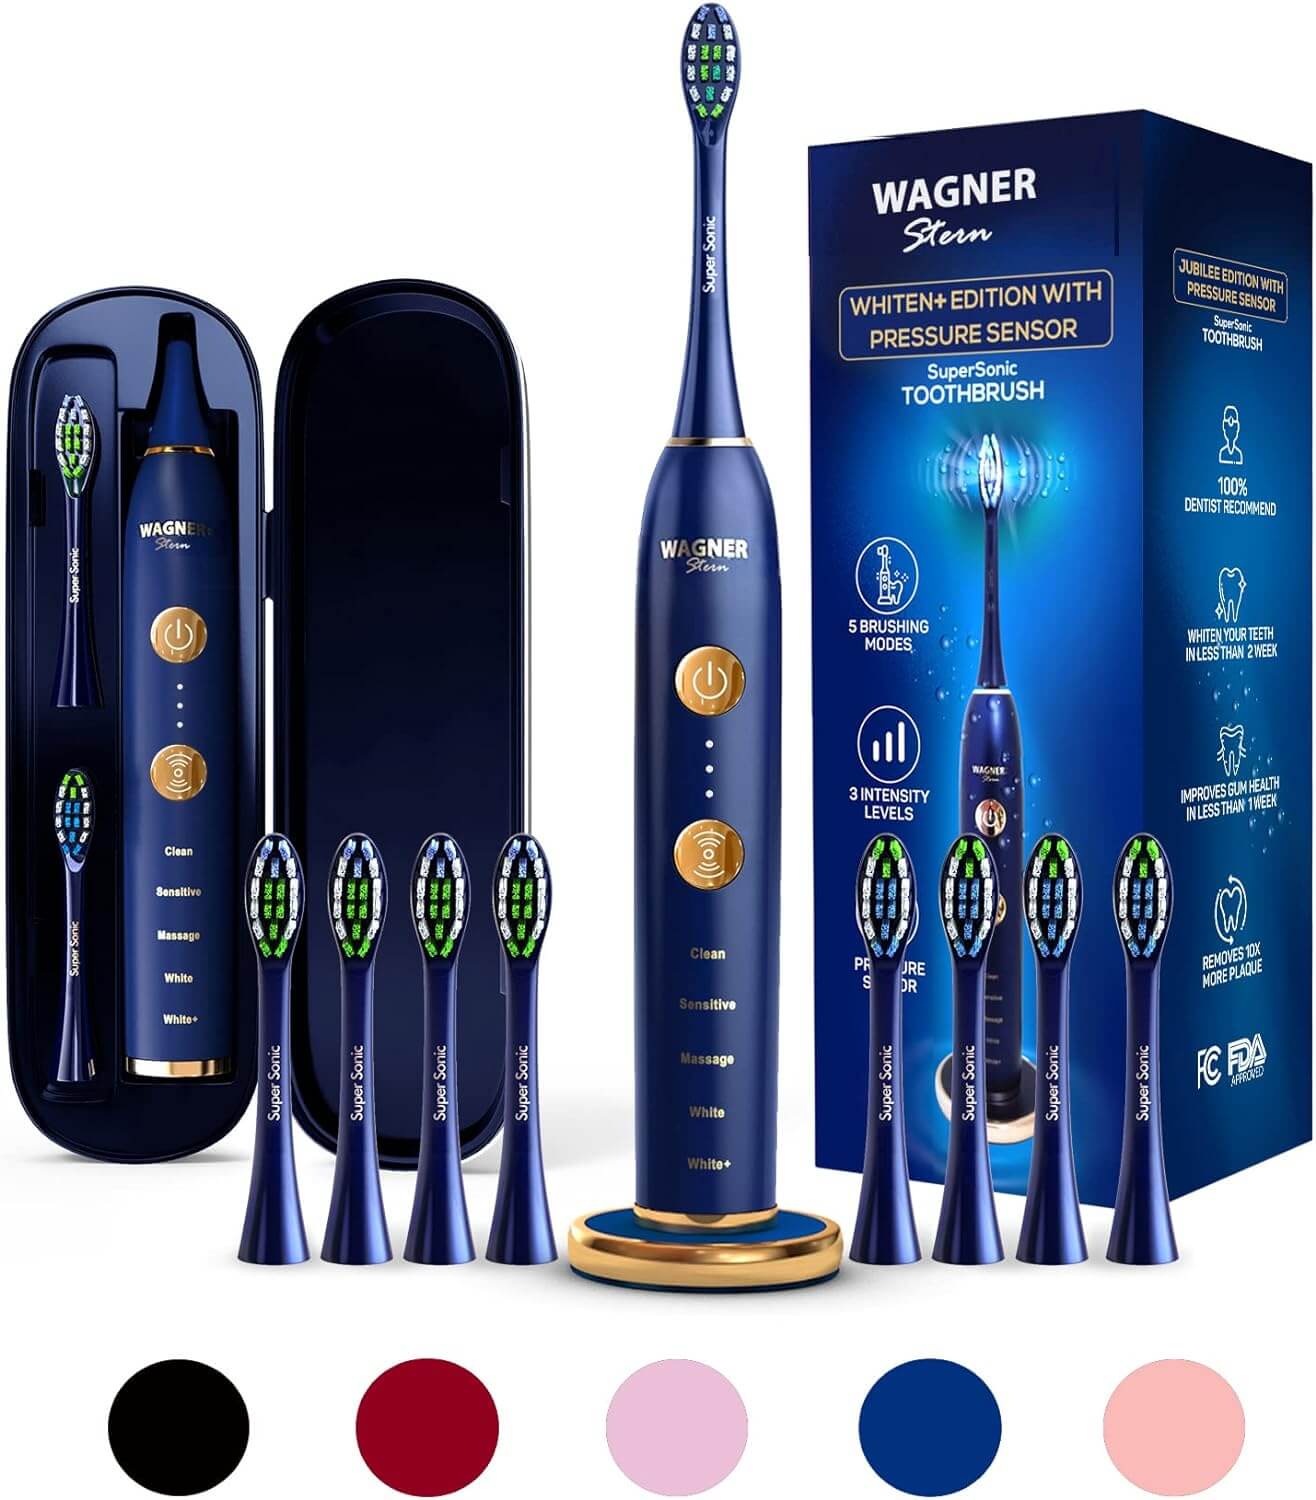 WAGNER Switzerland WHITEN+ EDITION Smart Electric Toothbrush